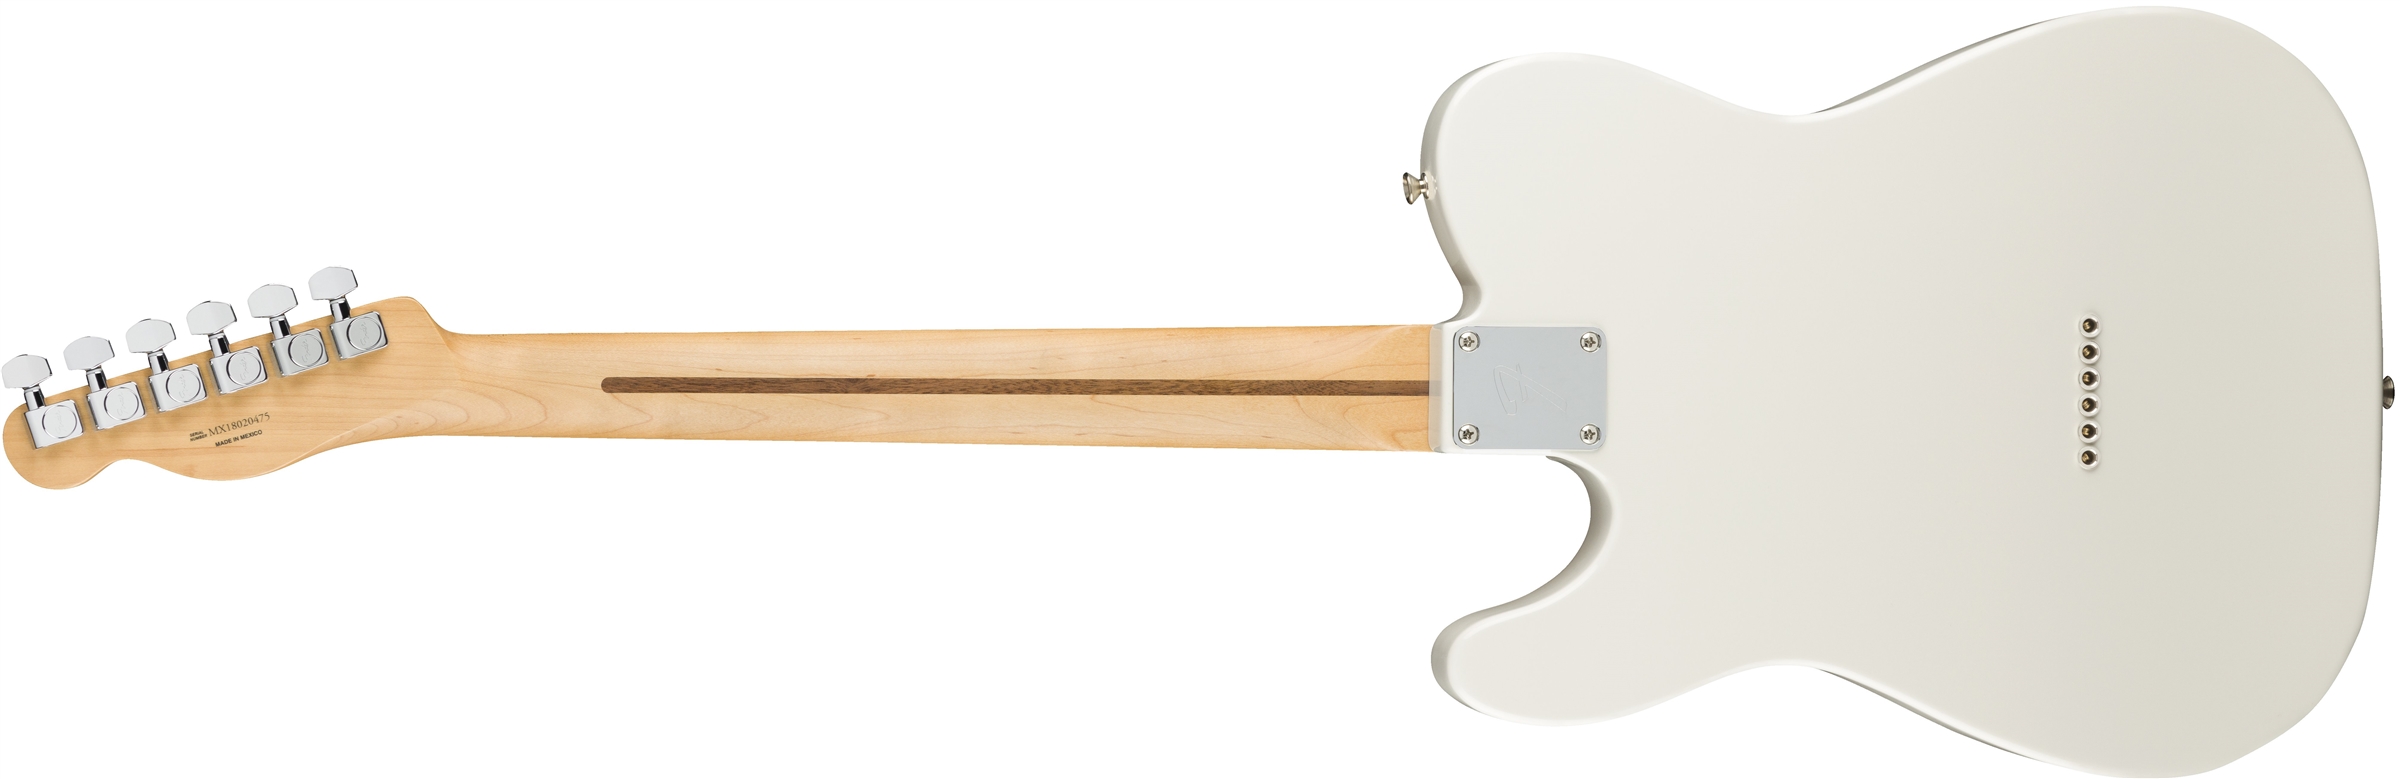 Fender Tele Player Mex Mn - Polar White - Guitarra eléctrica con forma de tel - Variation 2